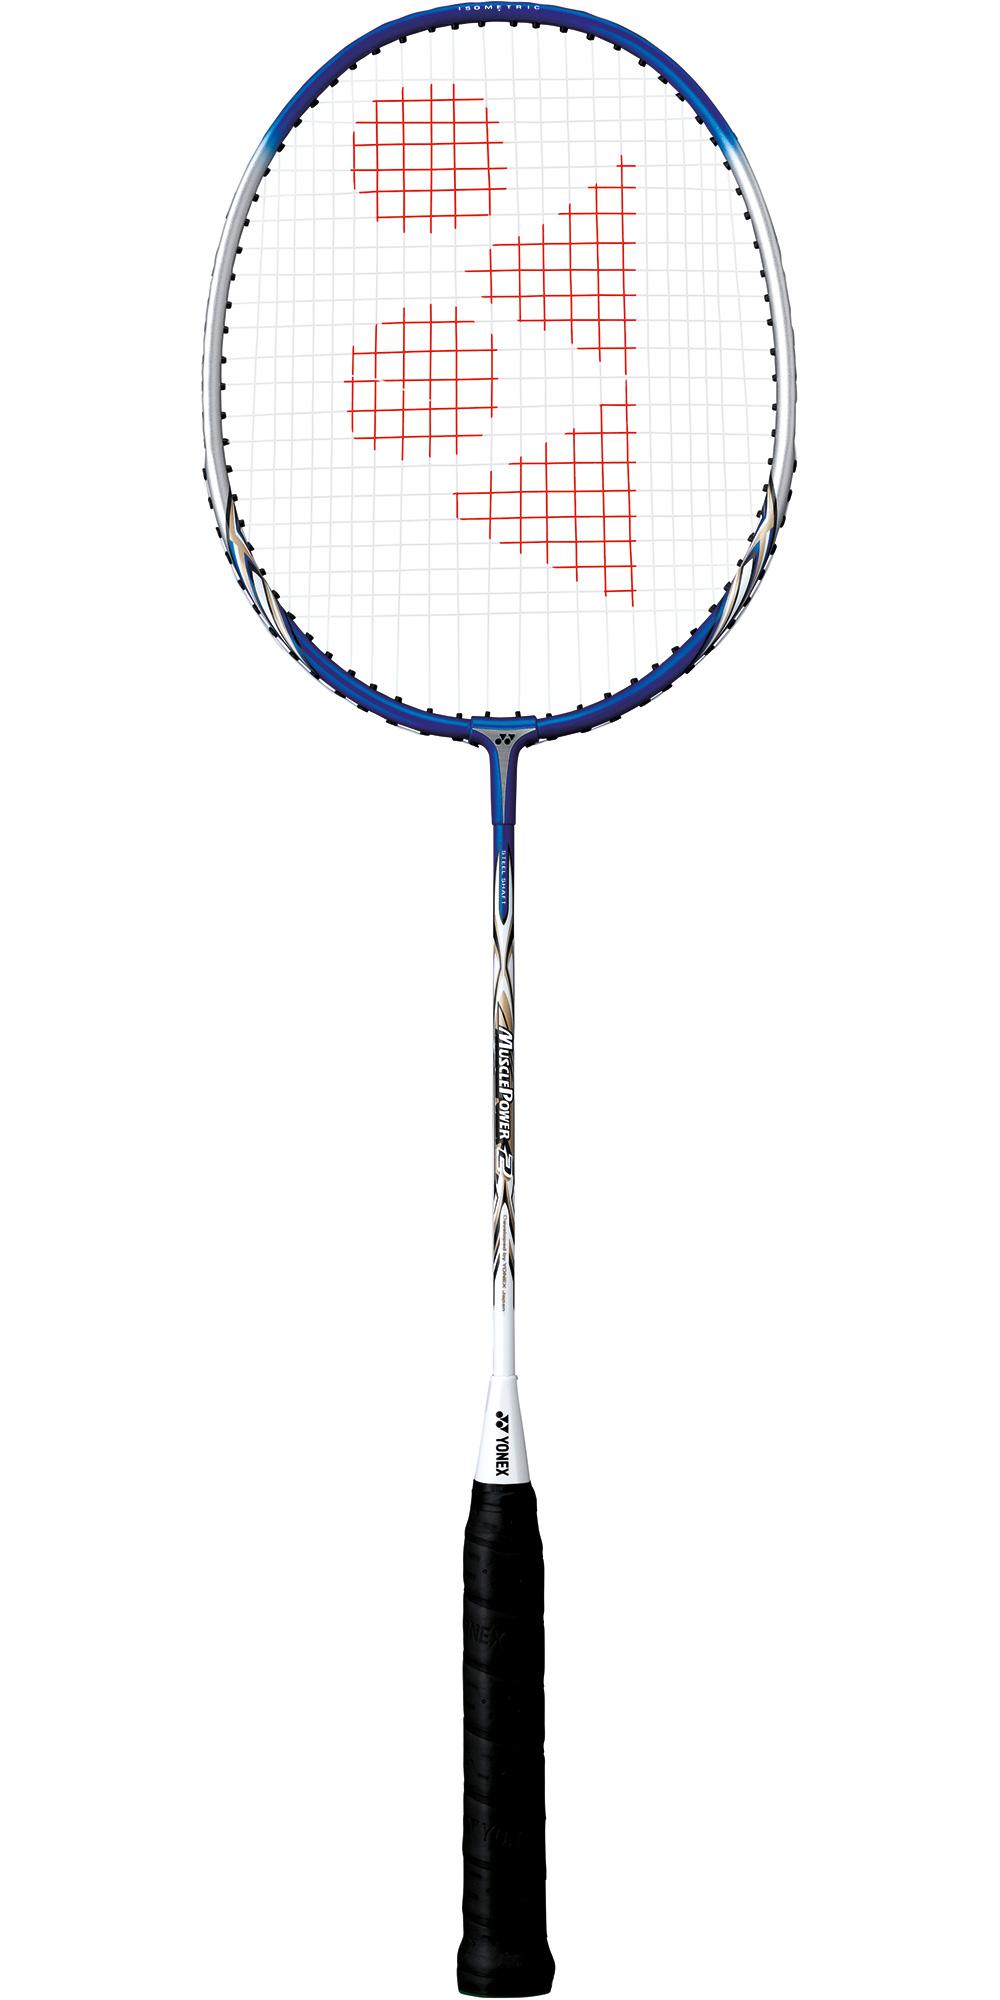 Yonex Muscle Power 2 Badminton Racket - Blue/Silver (2016)